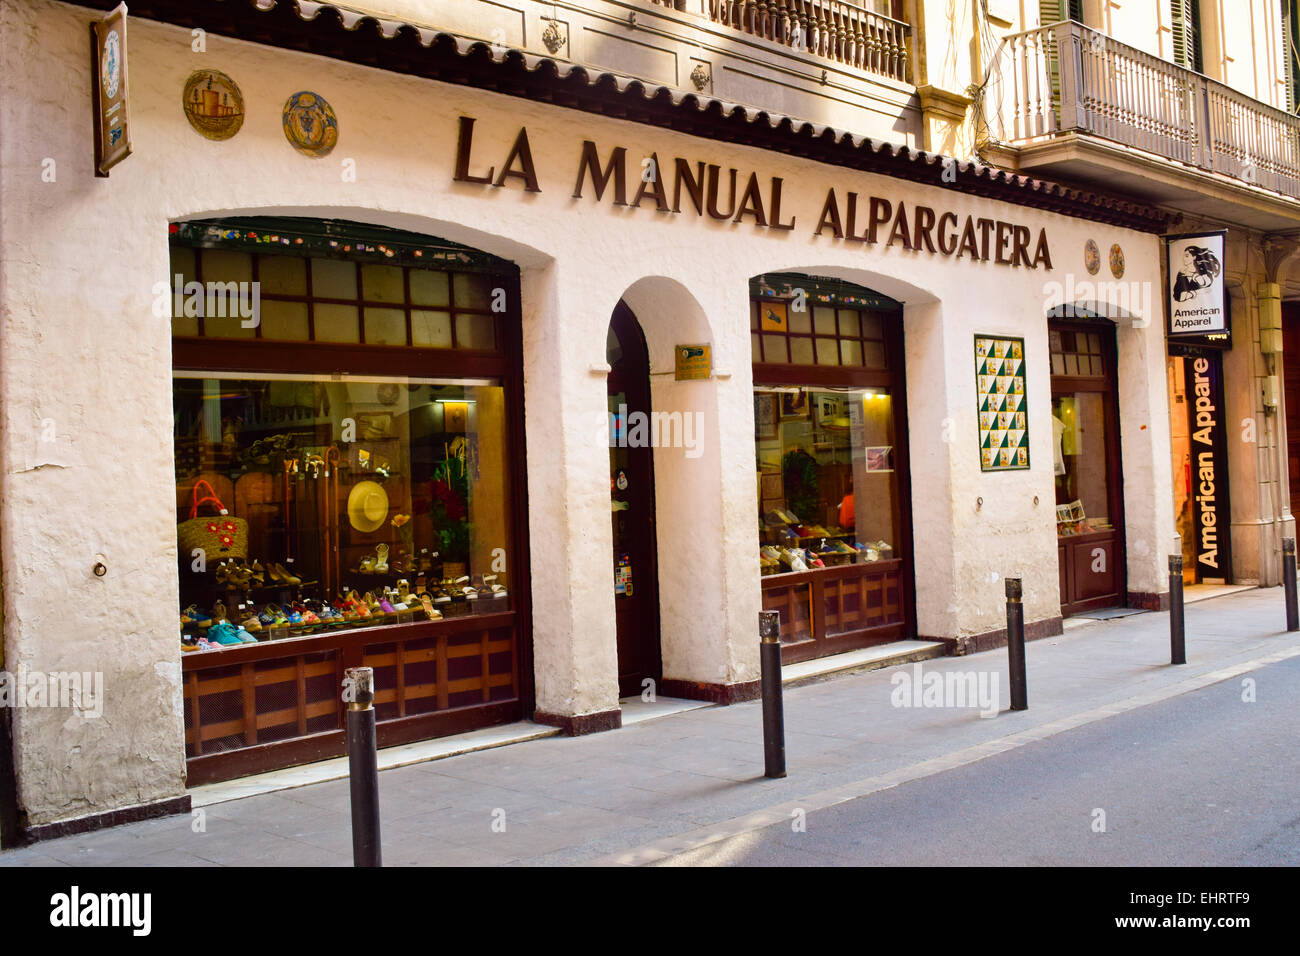 La manual alpargatera shop. Barcelona, Catalonia, Spain. Stock Photo